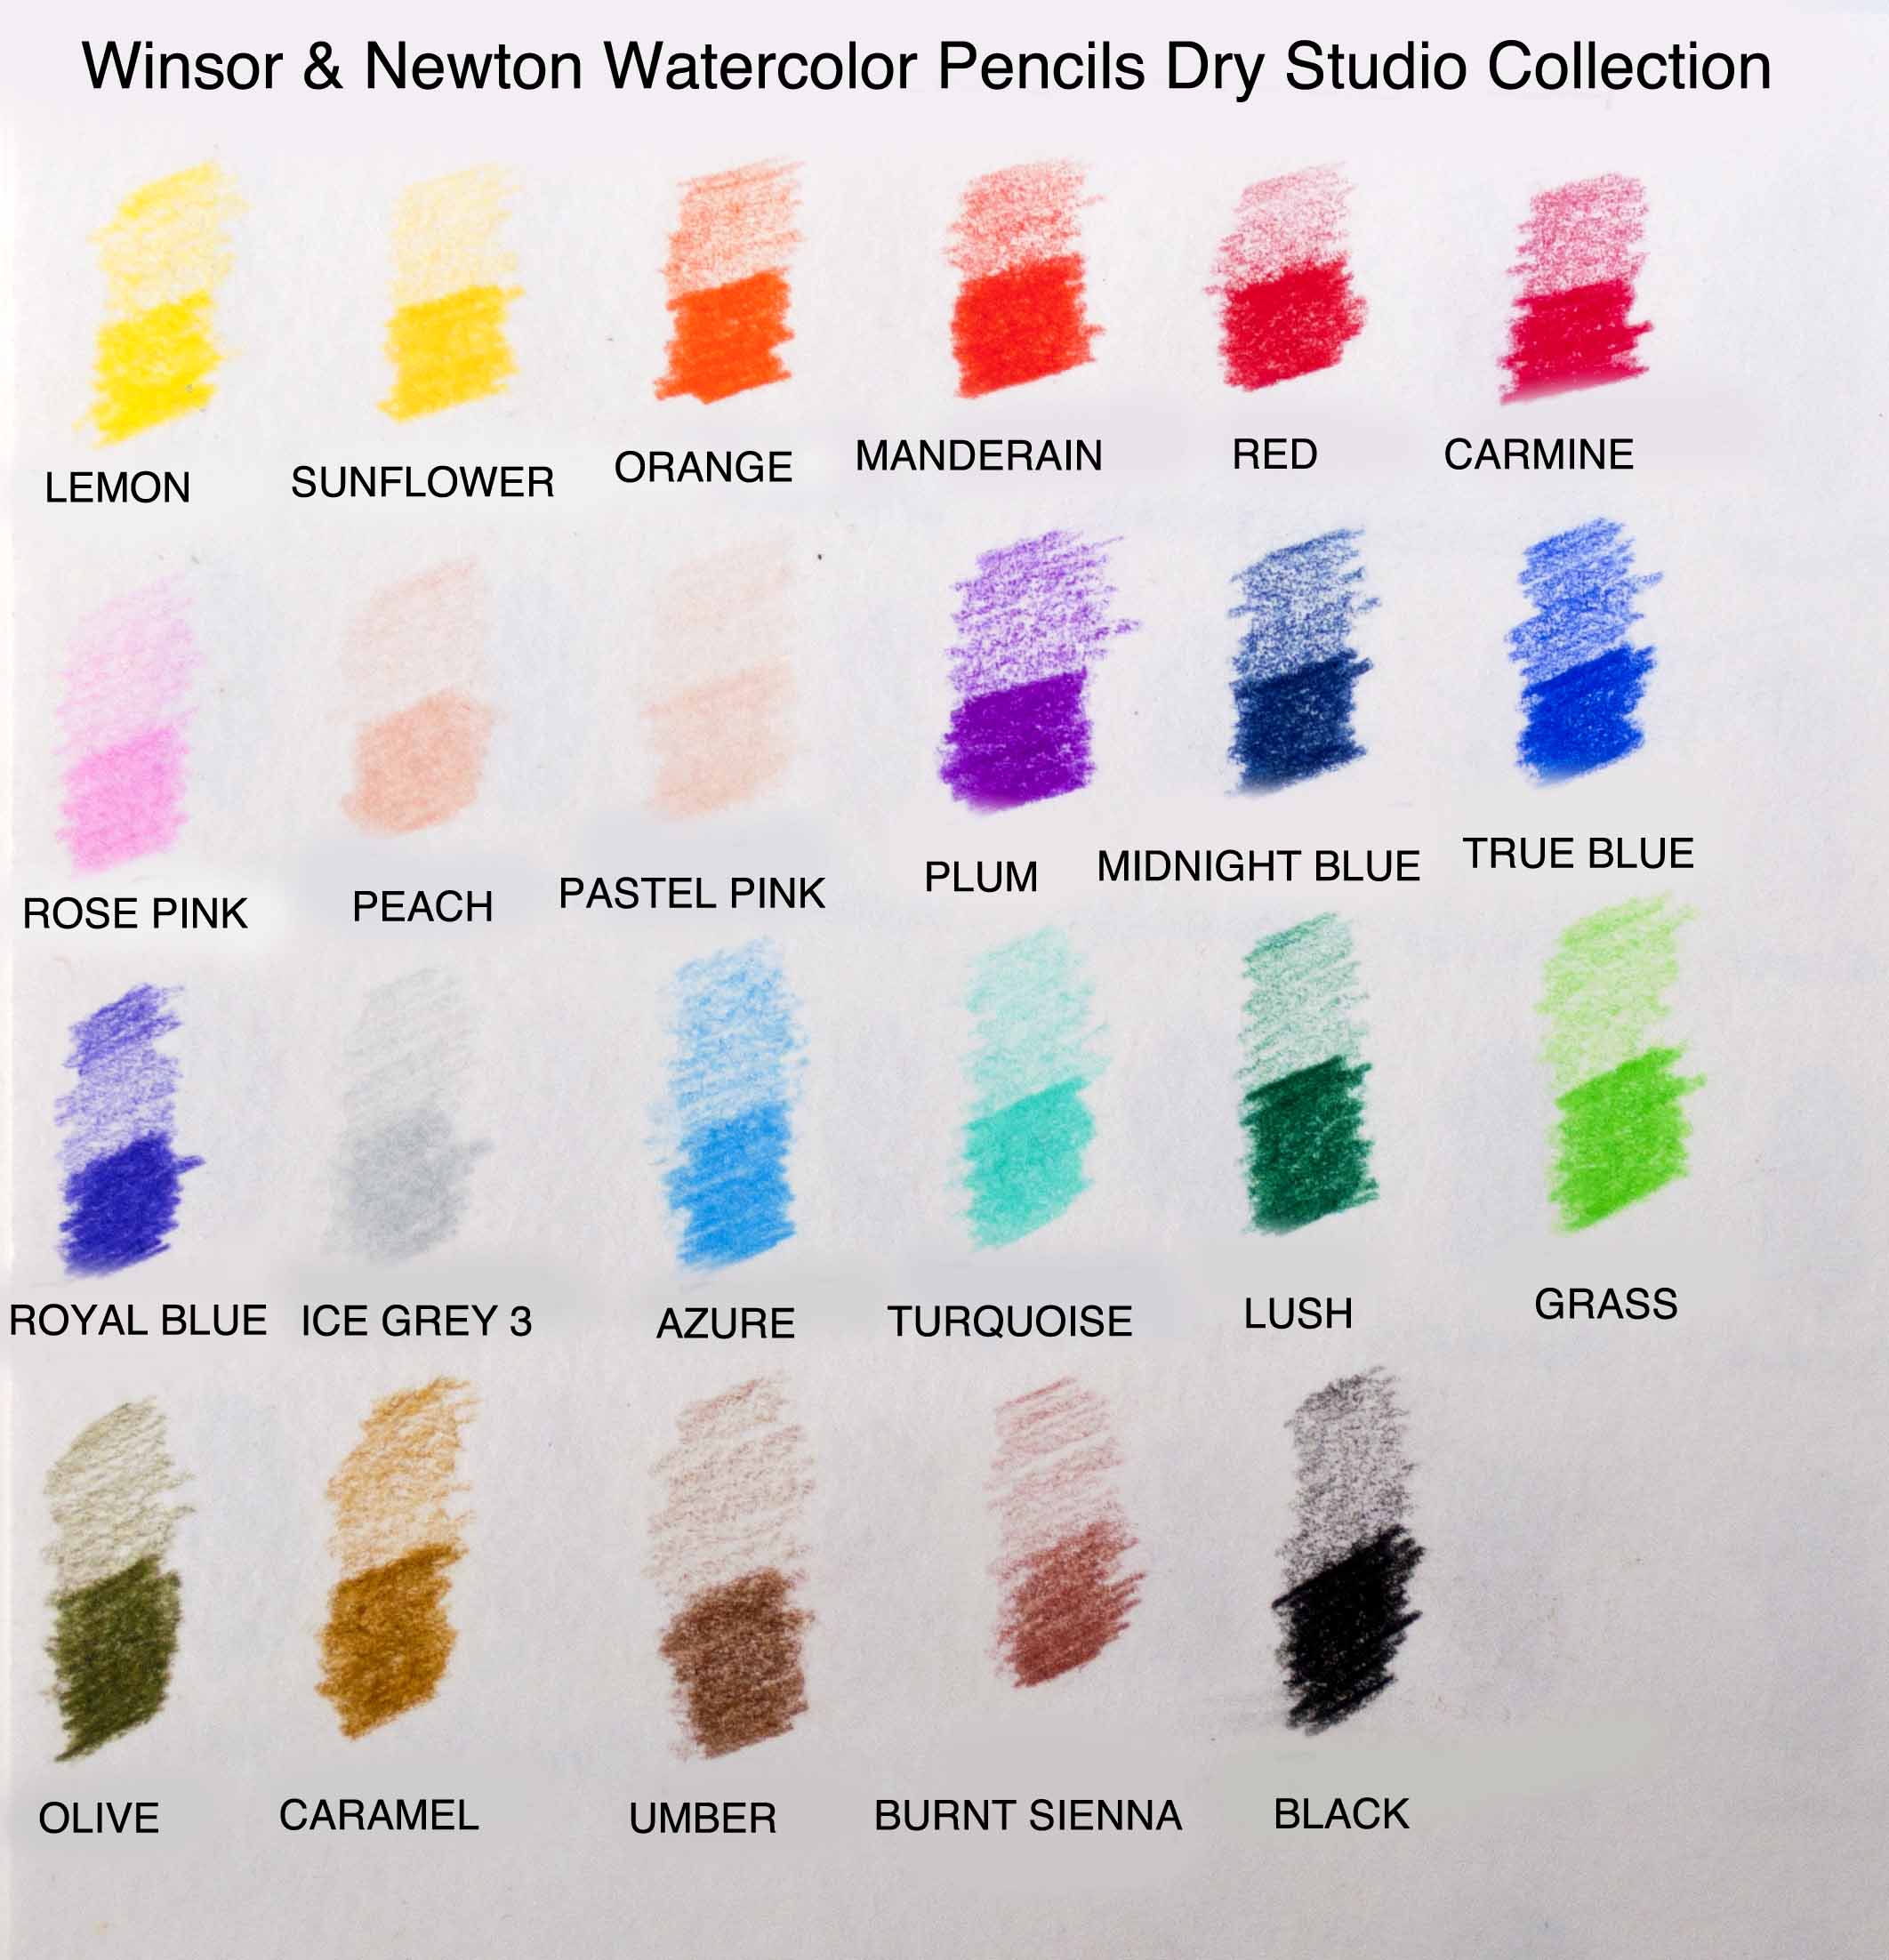 https://images.squarespace-cdn.com/content/v1/5816496ef5e2319b546c5d19/1550068258422-8QB68M11E6SD7Y8CLTEC/Winsor+%26+Newton+Watercolor+Swatch+Dry.jpg